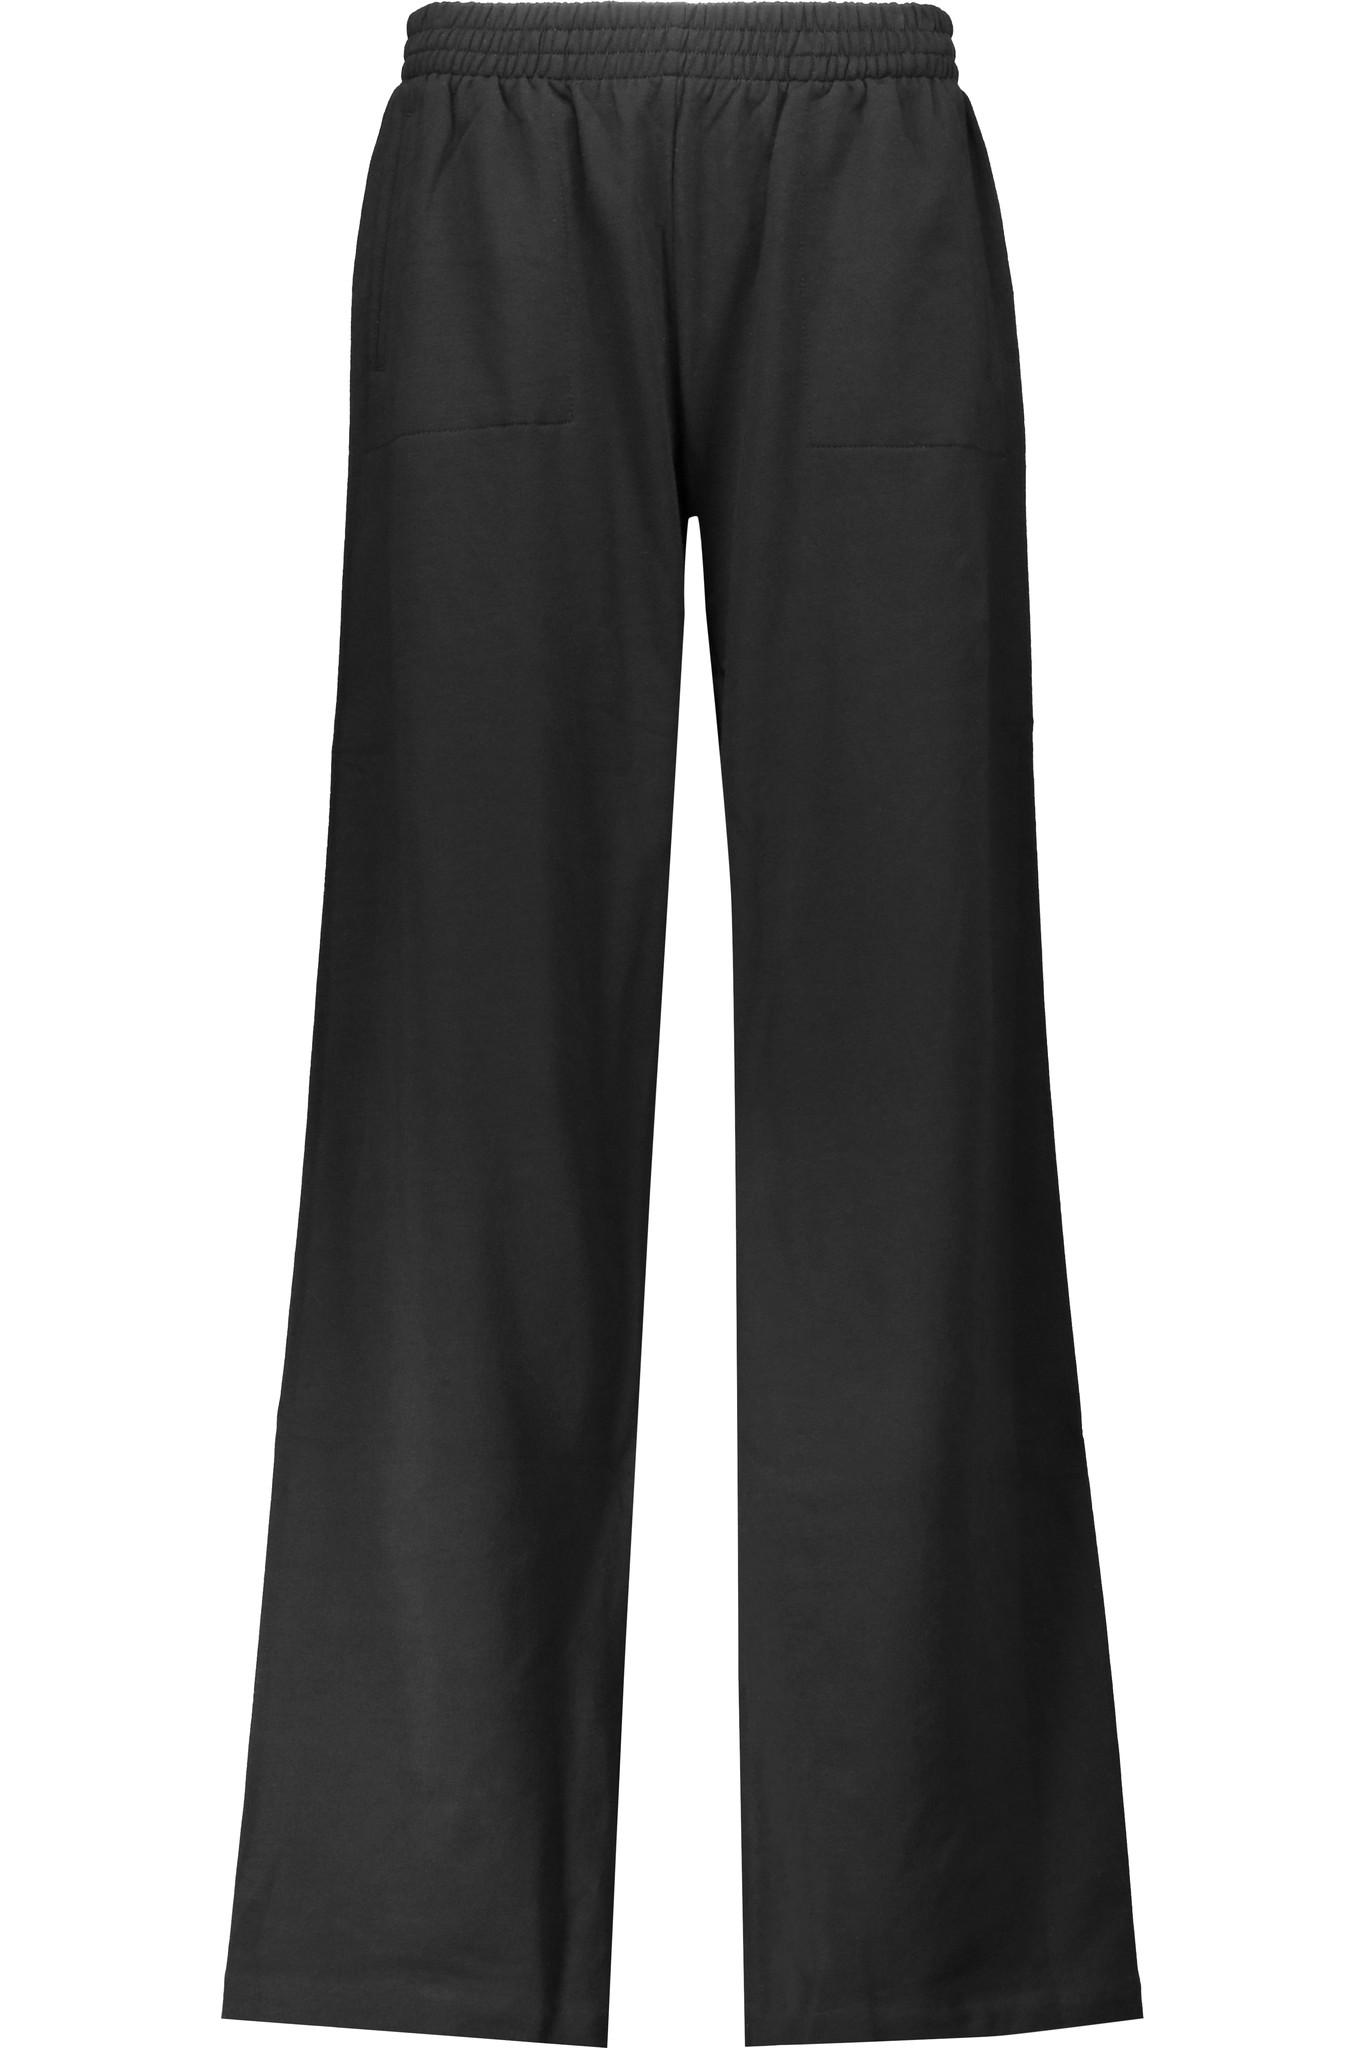 Norma Kamali Cotton-blend Wide-leg Track Pants in Black - Lyst